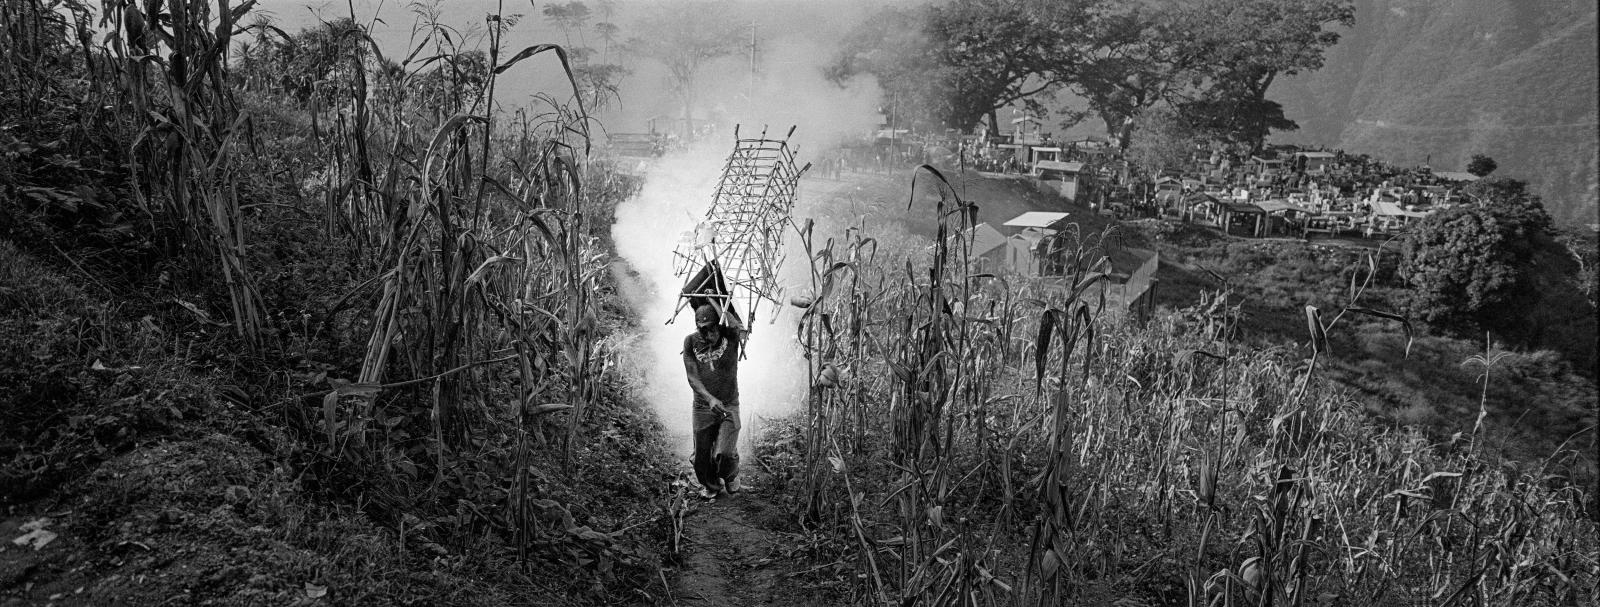 Xpan Panoramas of Oaxaca - A man carries fireworks in a maize field in Mazatlan...